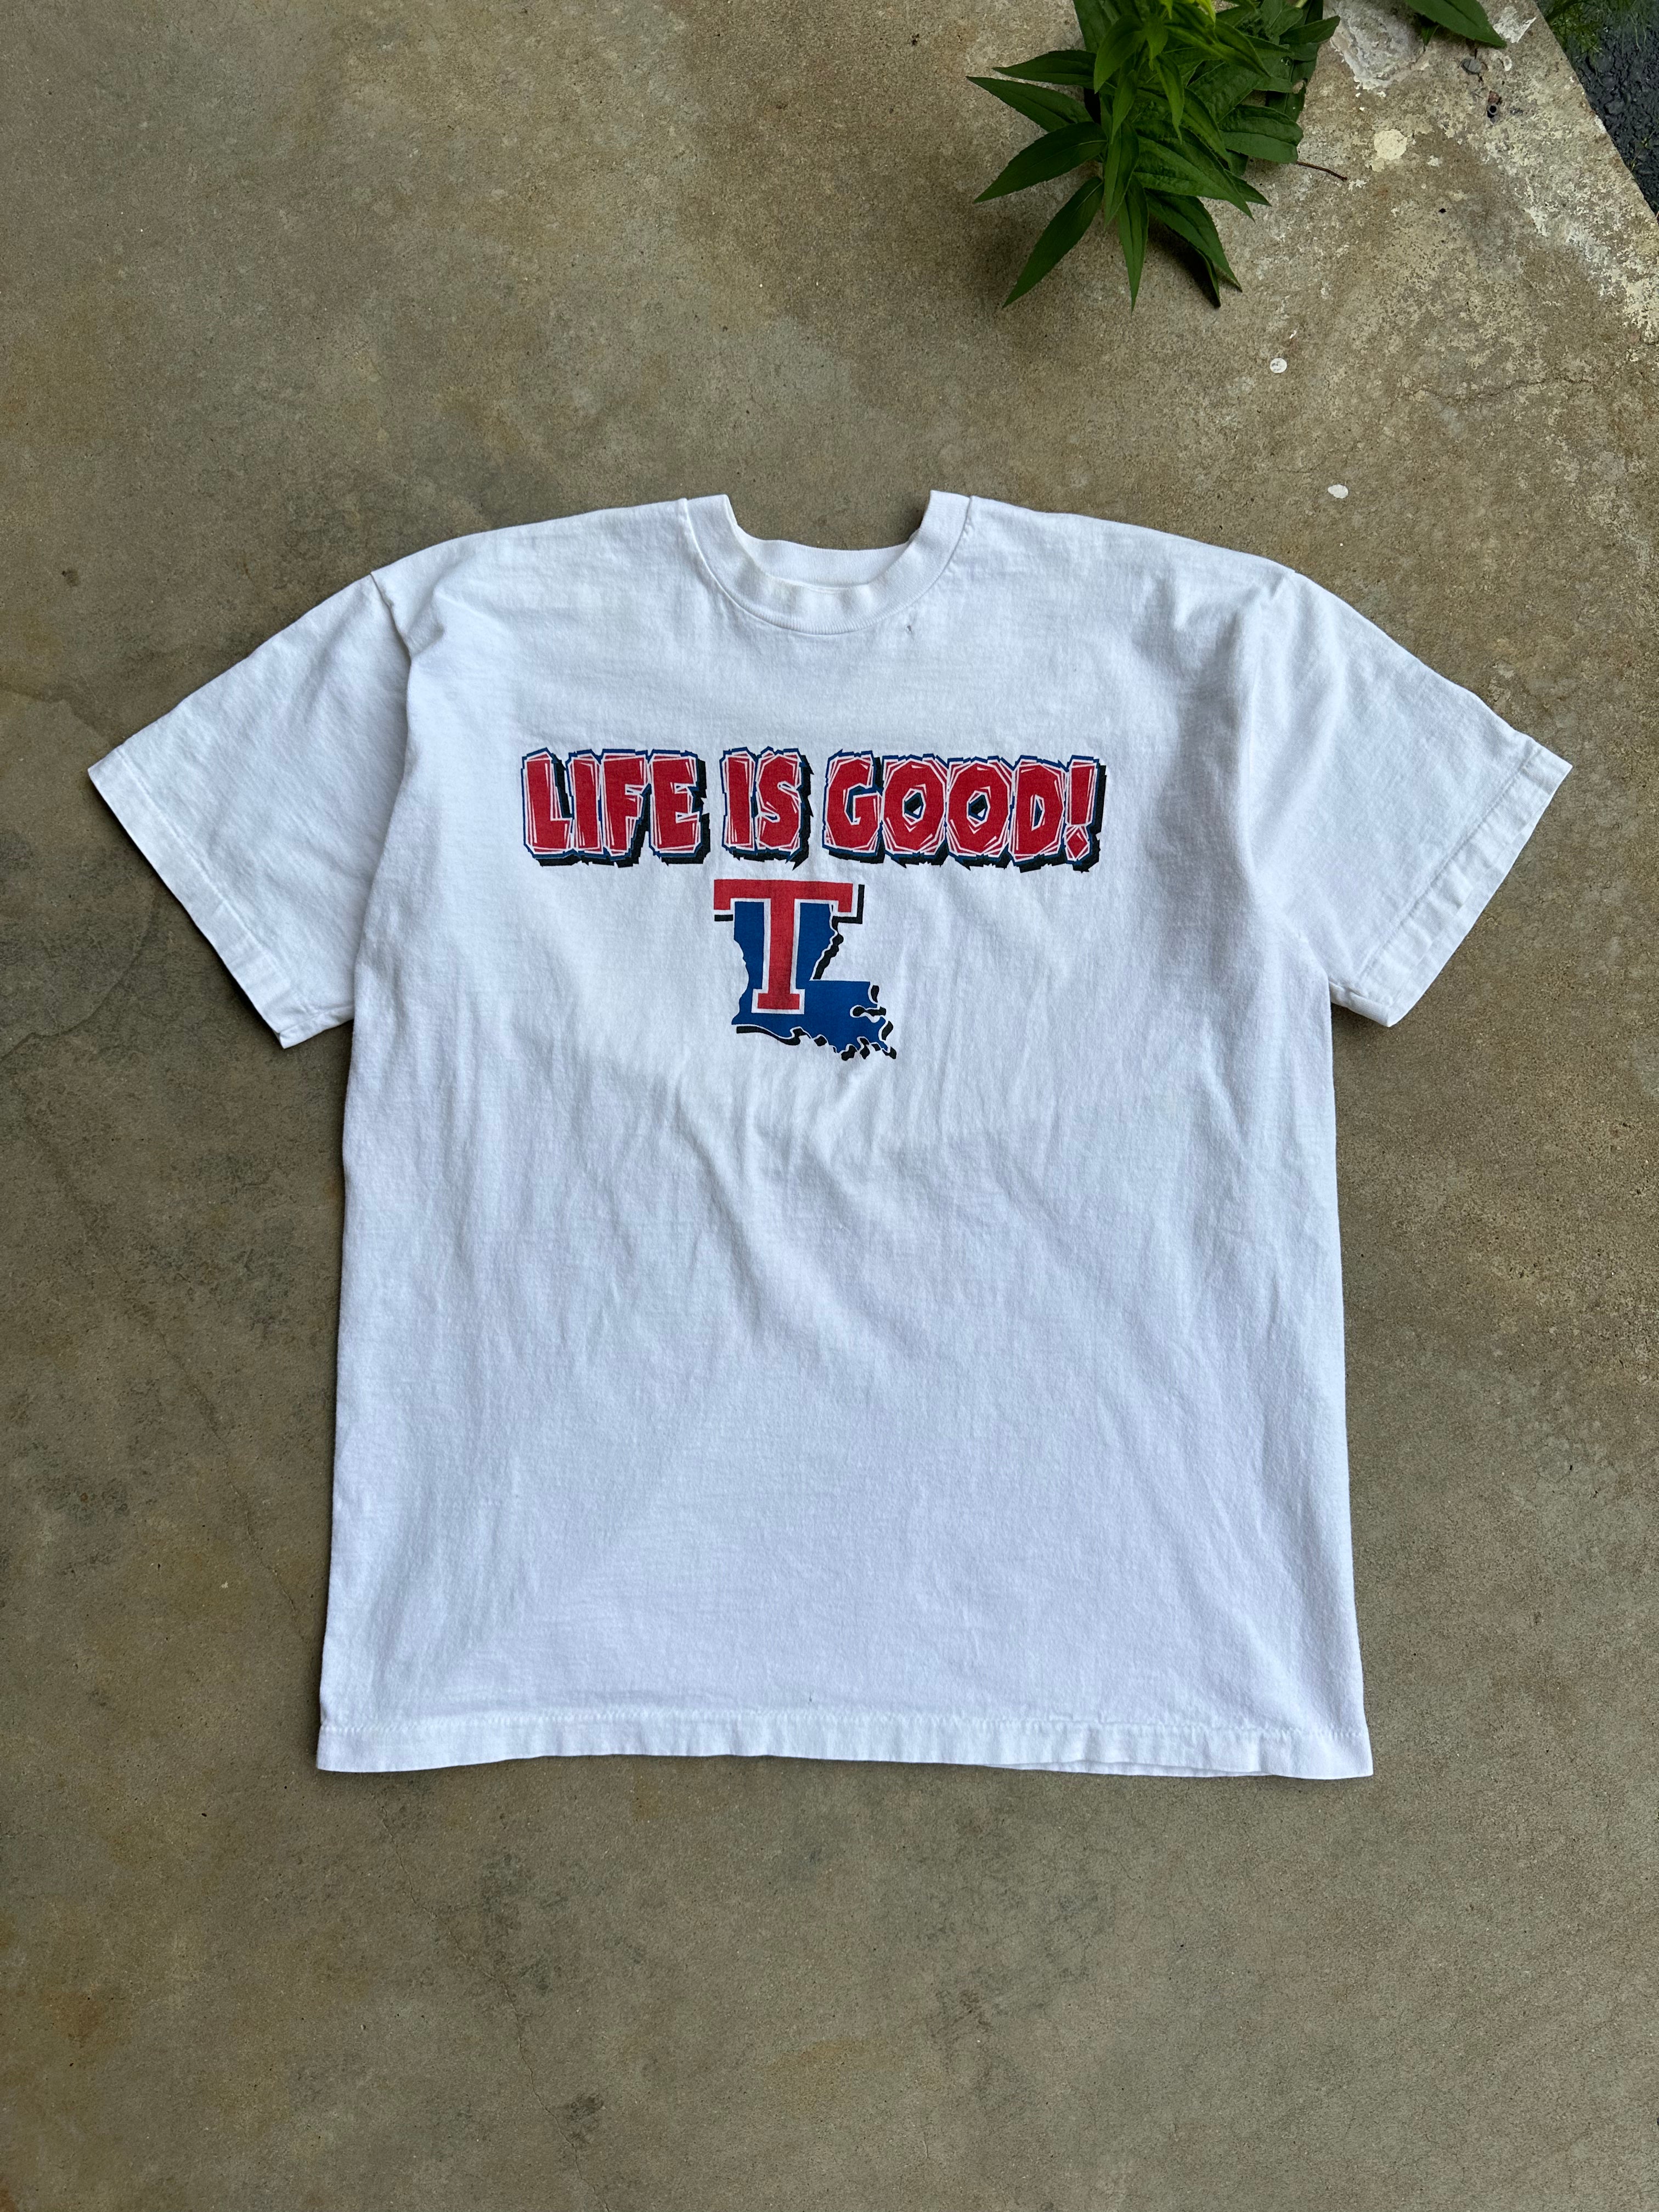 1990s Louisiana Tech “Life is Good!” T-Shirt (XL)